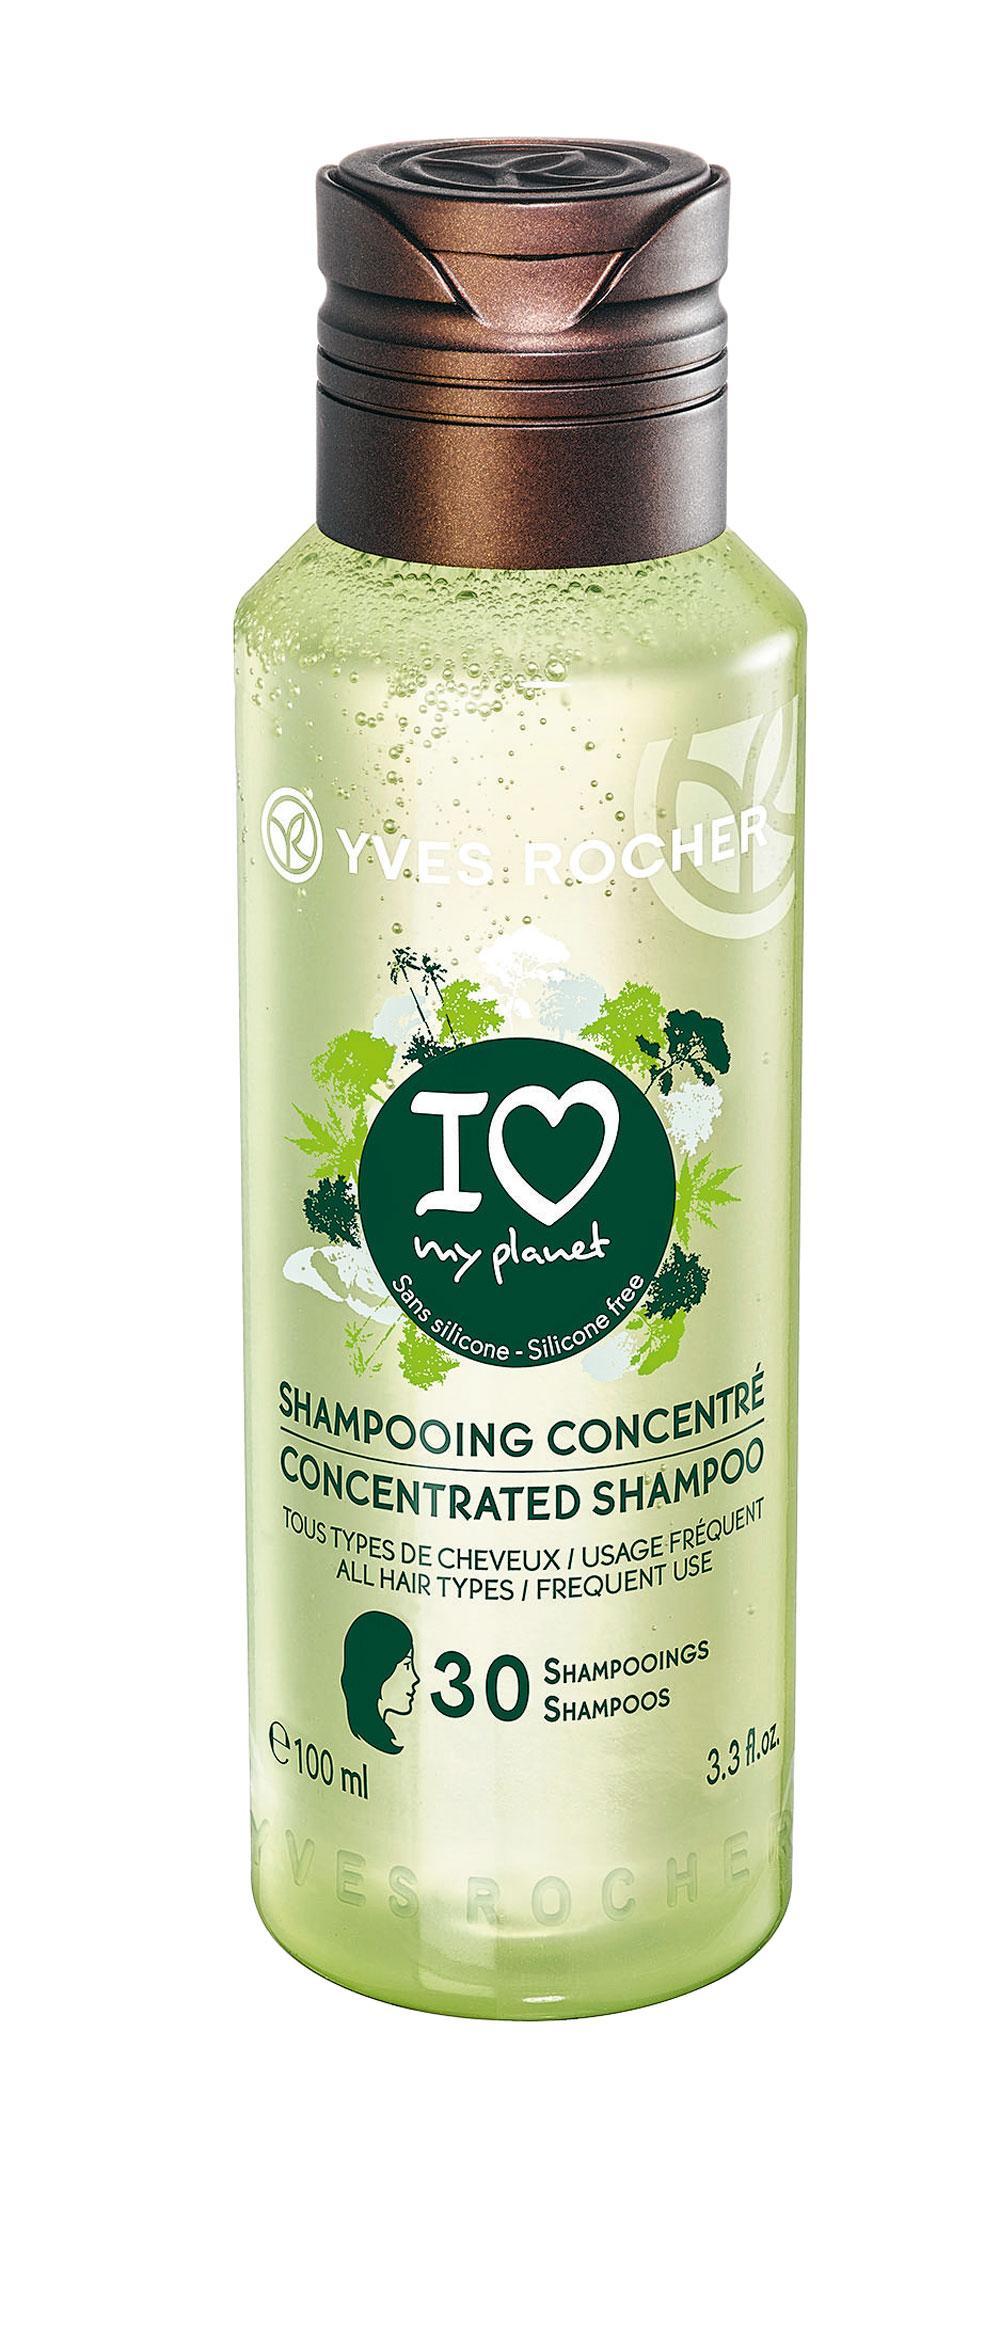 De CO2-neutrale skincare wordt geproduceerd met groene elektriciteit. I Love My Planet Concentrated Shampoo (3,95 euro) van Yves Rocher.